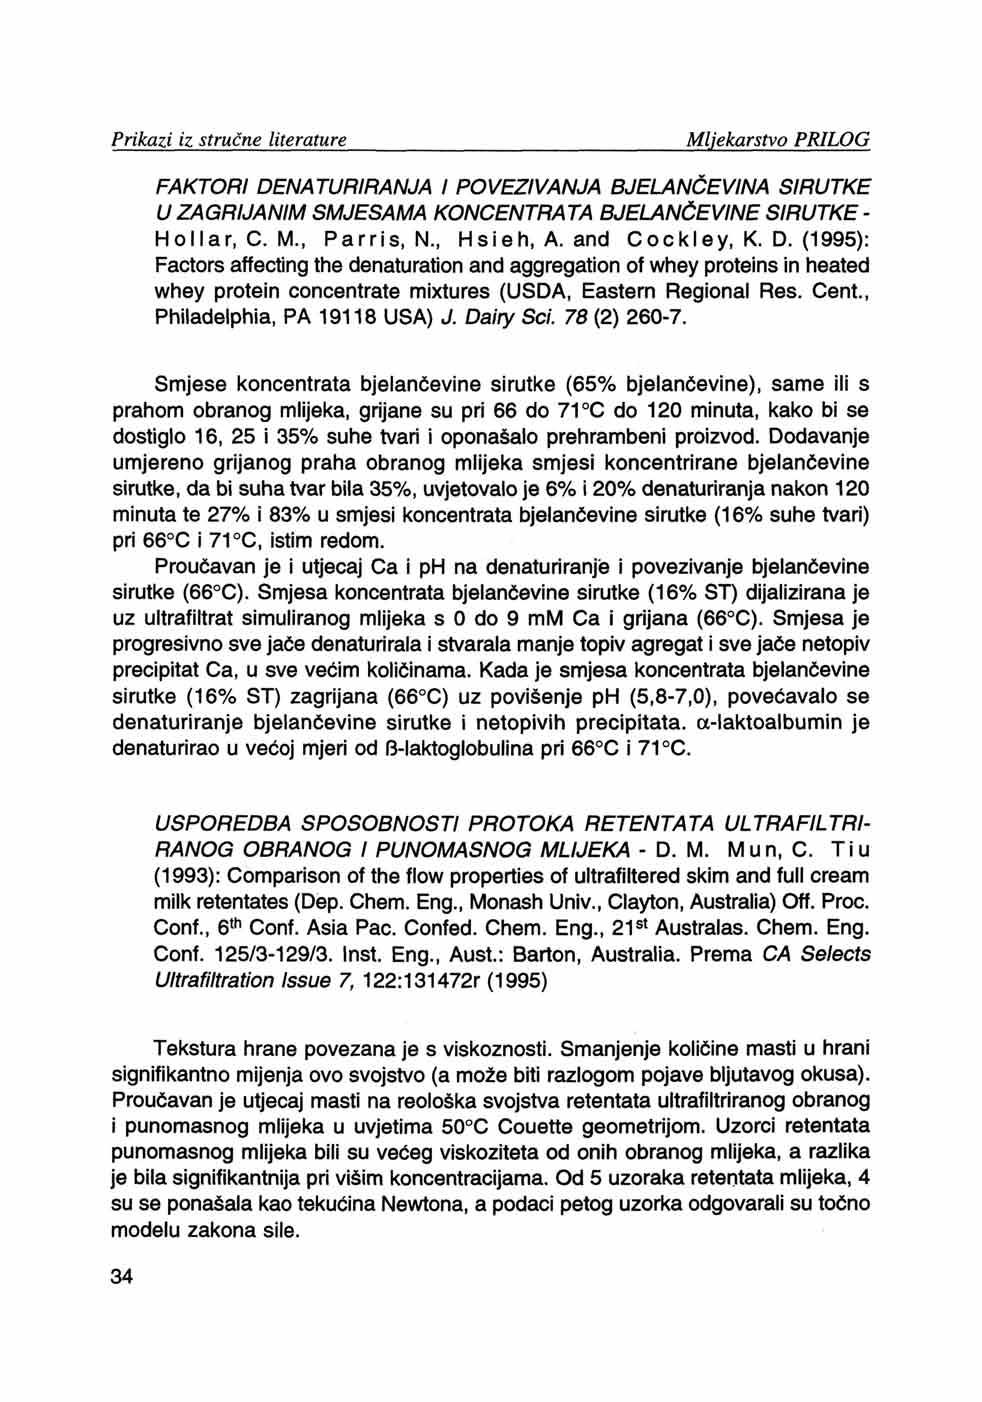 FAKTORI DENATURIRANJA I POVEZIVANJA BJELANČEVINA SIRUTKE U ZAGRIJANIM SMJESAMA KONCENTRATA BJELANČEVINE SIRUTKE - Hollar, C. M., Parris, N., H si eh, A. and Cockley, K. D. (1995): Factors affecting the denaturation and aggregation of whey proteins in heated whey protein concentrate mixtures (USDA, Eastern Regional Res.